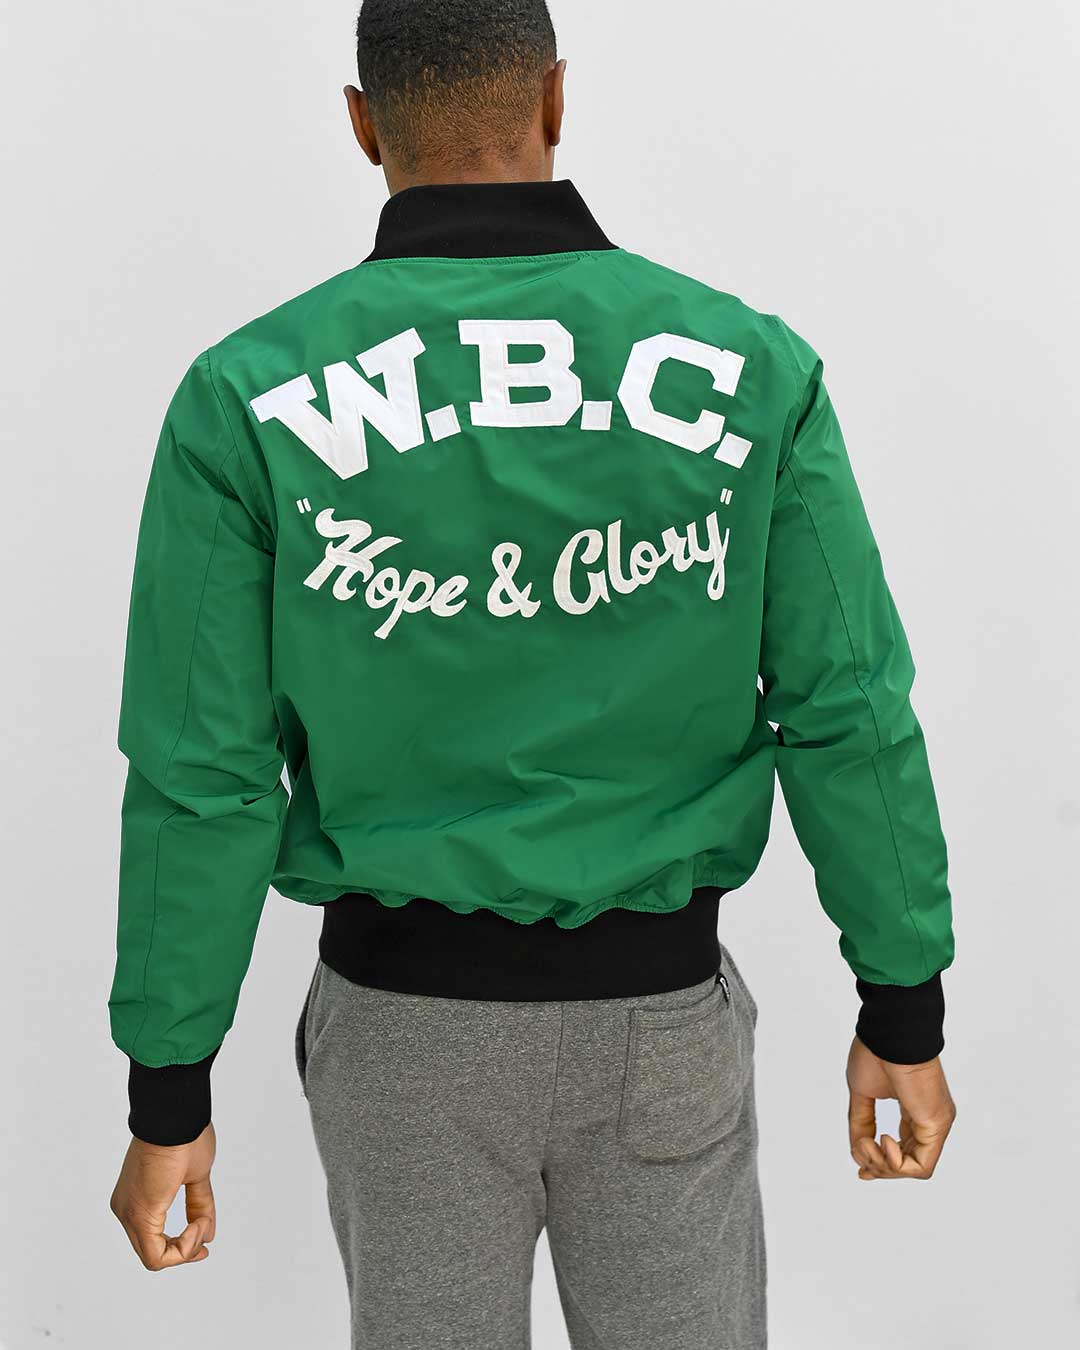 World Boxing Council Stadium Jacket Bundle - Roots of Fight